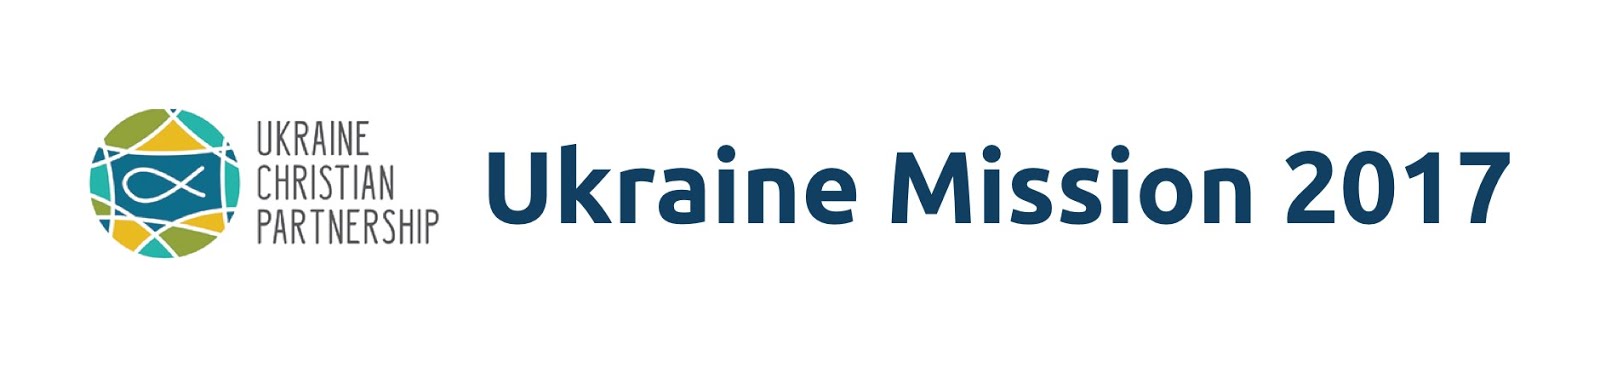 Ukraine Mission 2017